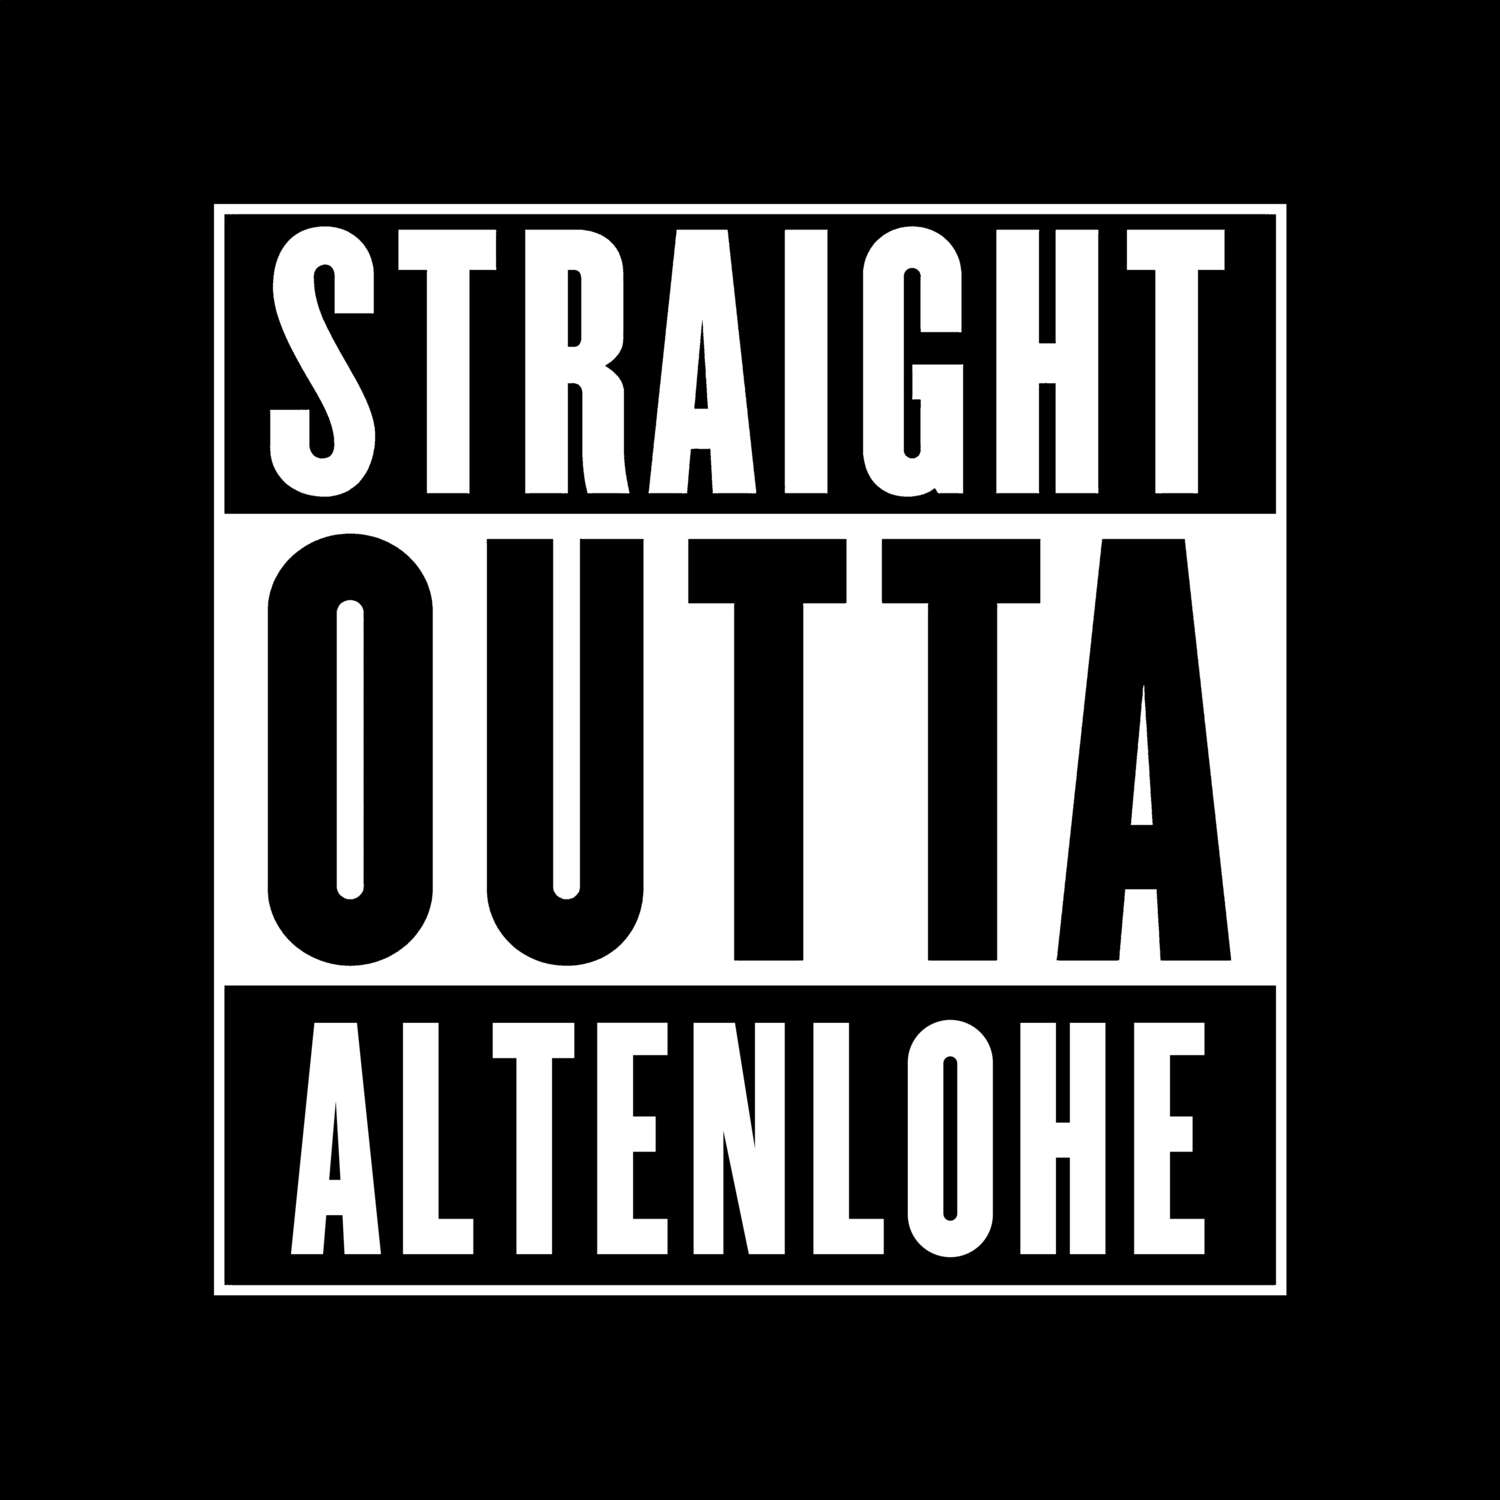 Altenlohe T-Shirt »Straight Outta«